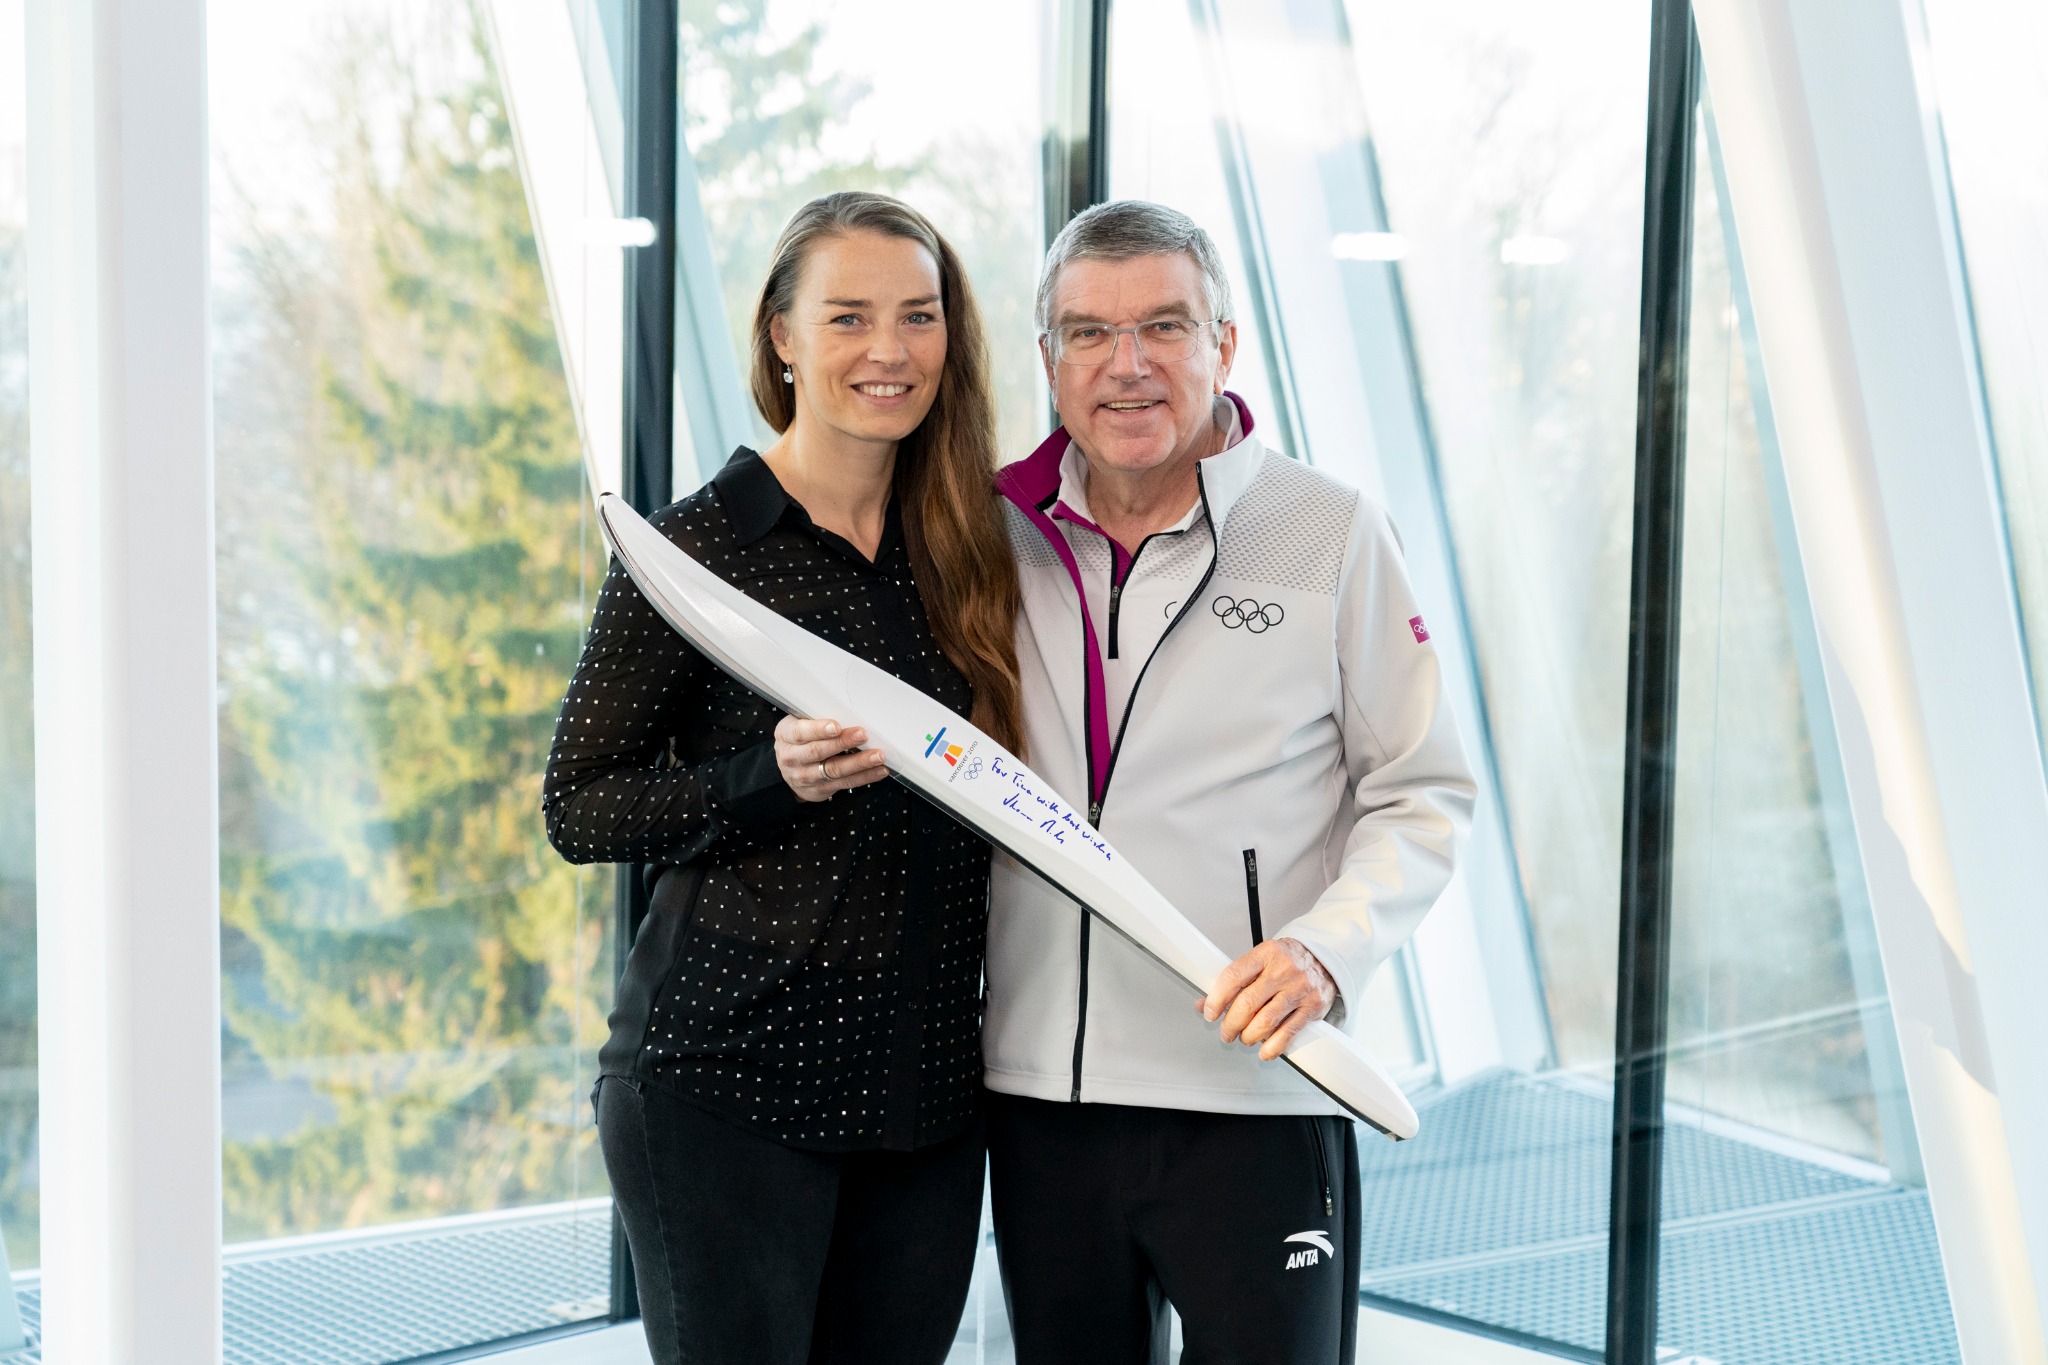 Tina Maze prejela baklo iz olimpijskih iger v Vancouvru